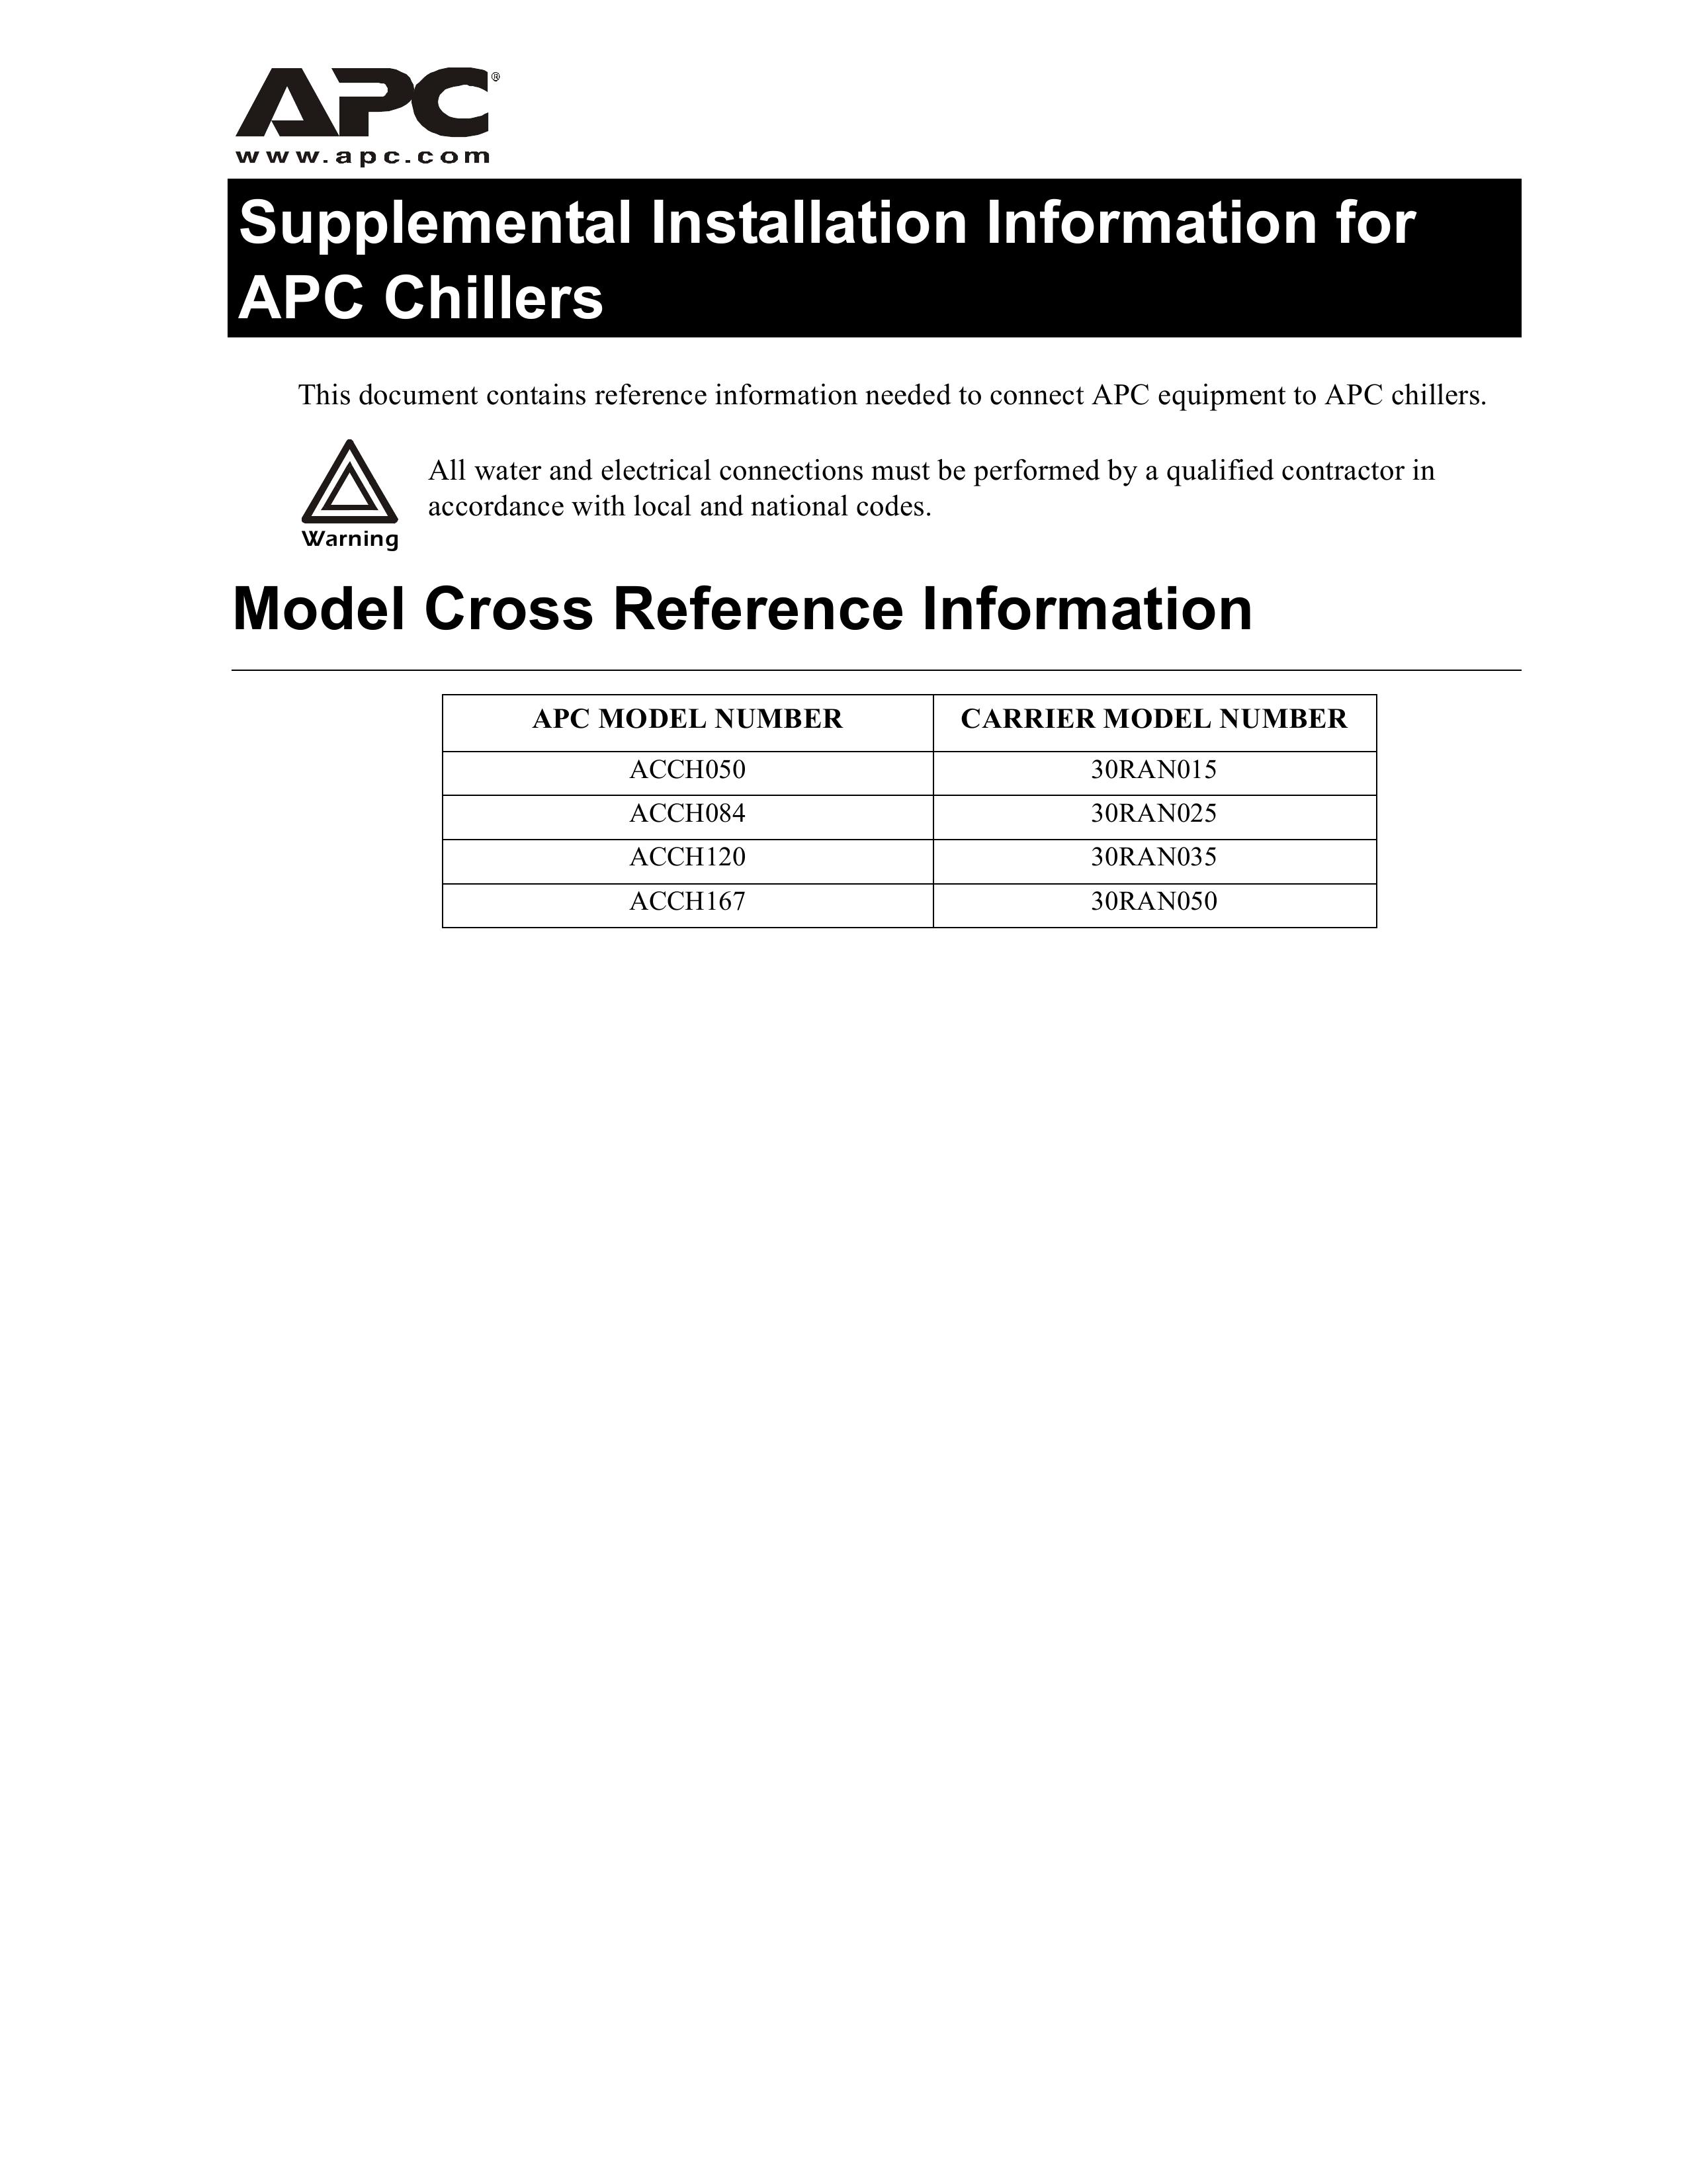 American Power Conversion ACCH050 Refrigerator User Manual